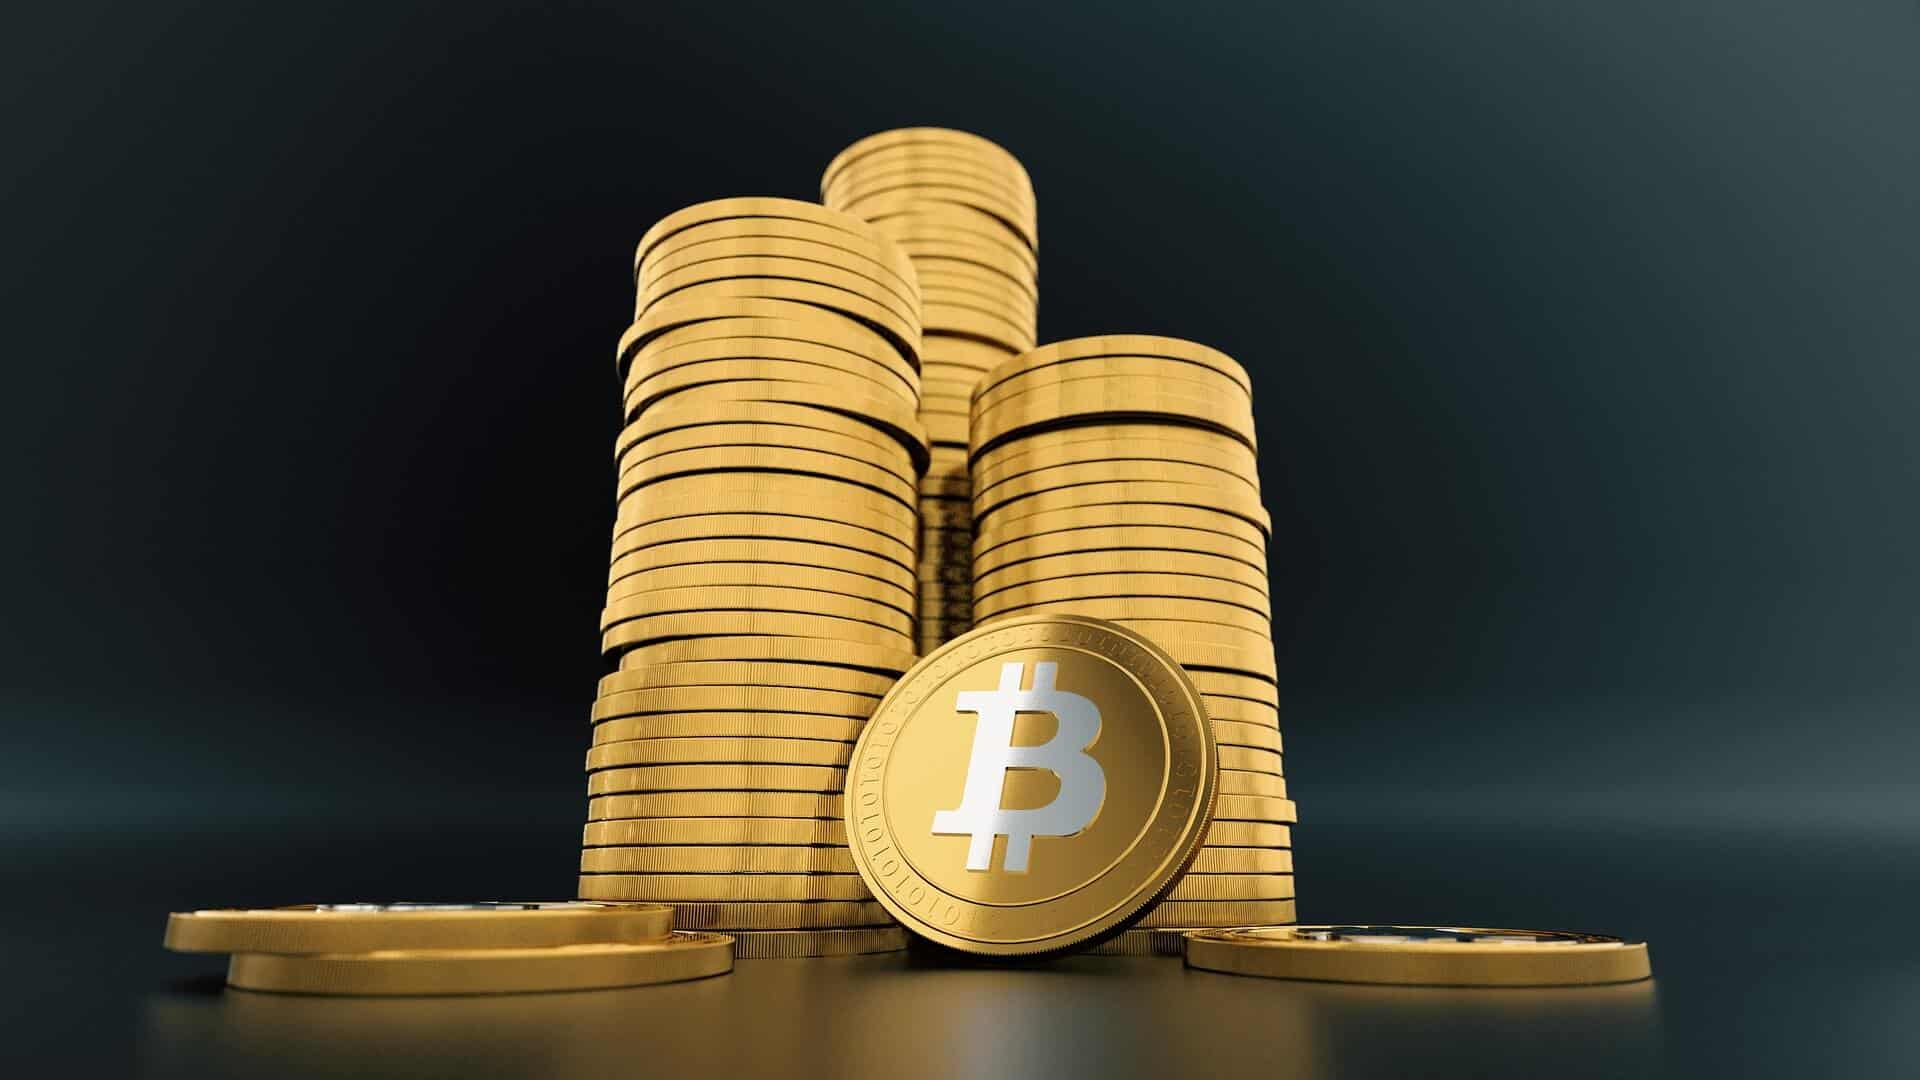 Billionaire Entrepreneur Mark Cuban Equates Gold with Bitcoin, Calls Them “The Same Thing”